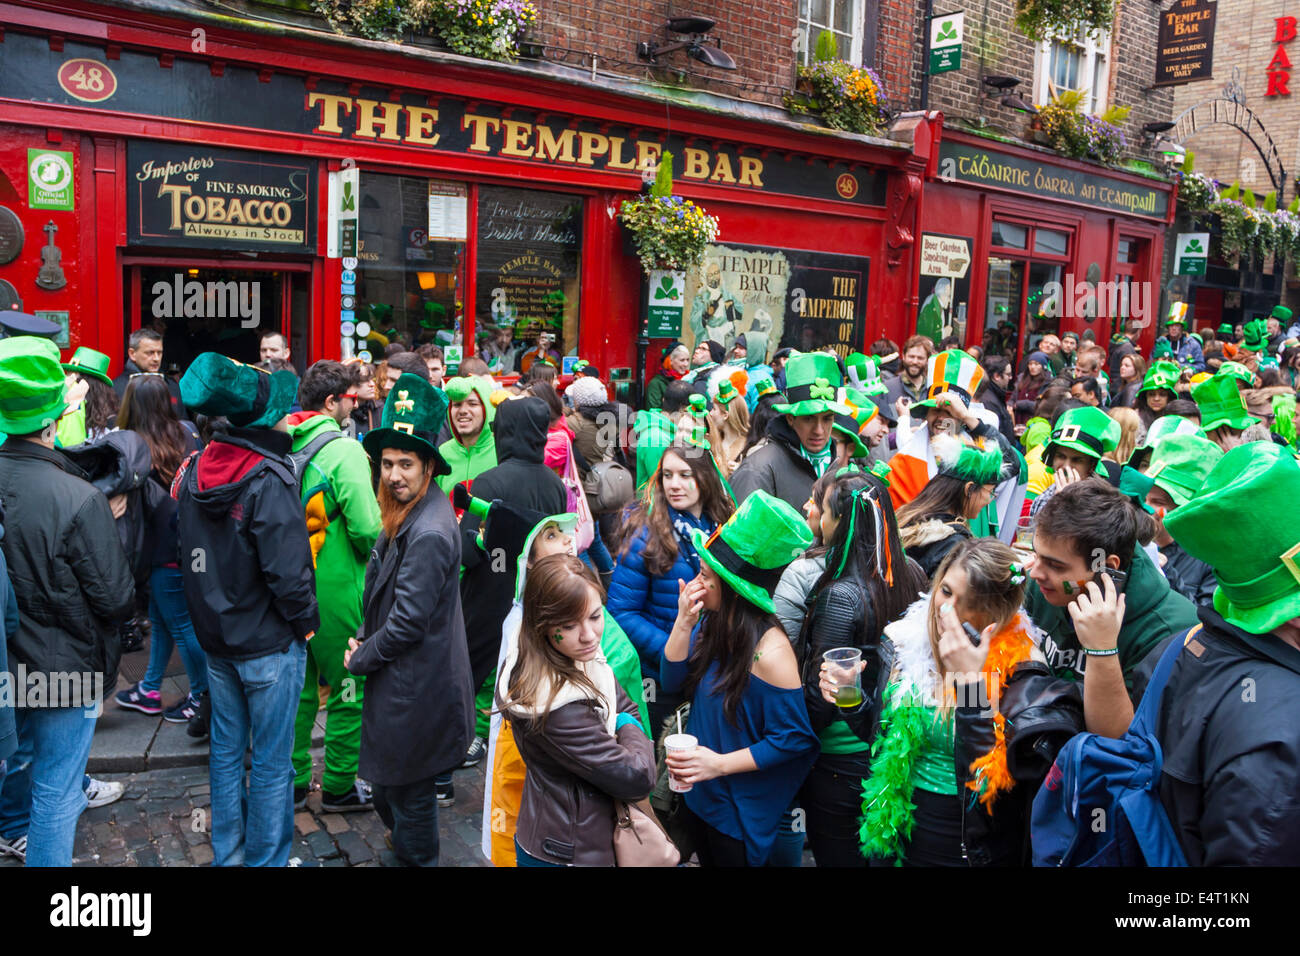 St. Patrick's Day Hat - The Temple Bar Pub